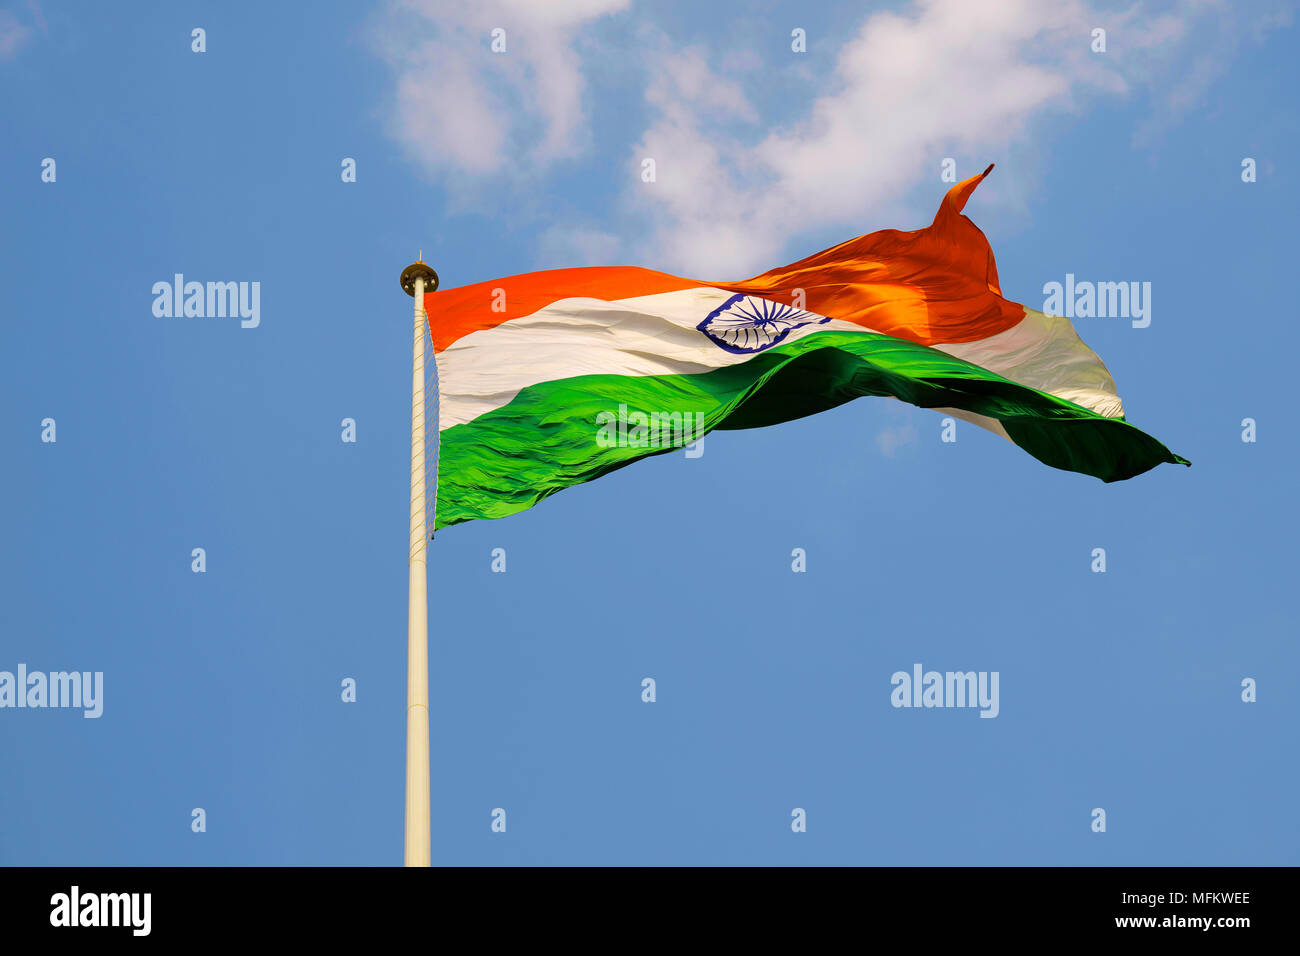 Indian National flag. Tallest pole and largest Indian flag on land at Belagavi, Karnataka state, India. Stock Photo